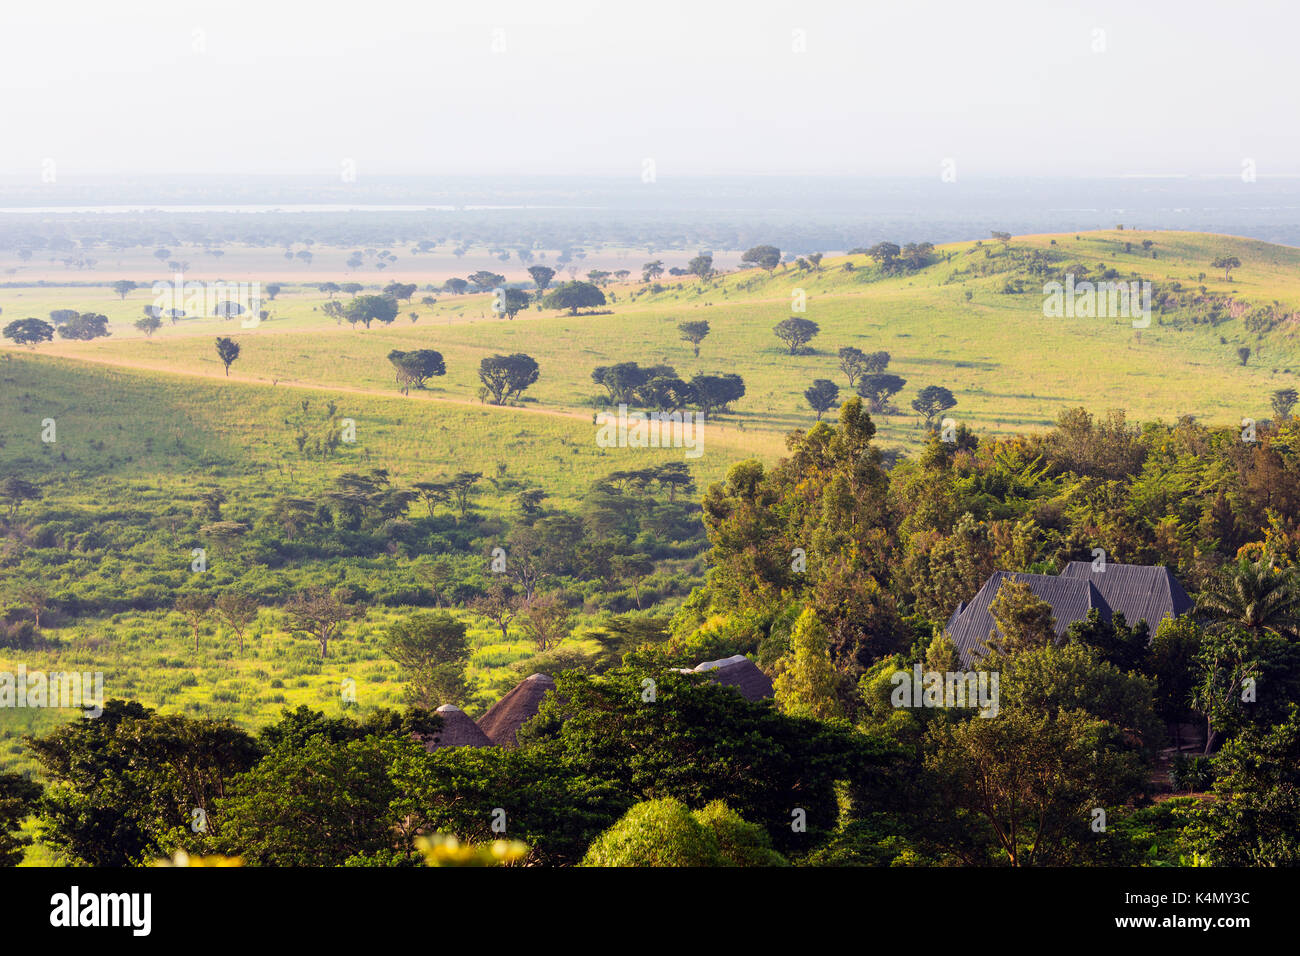 Queen Elizabeth National Park, Uganda, Africa Stock Photo